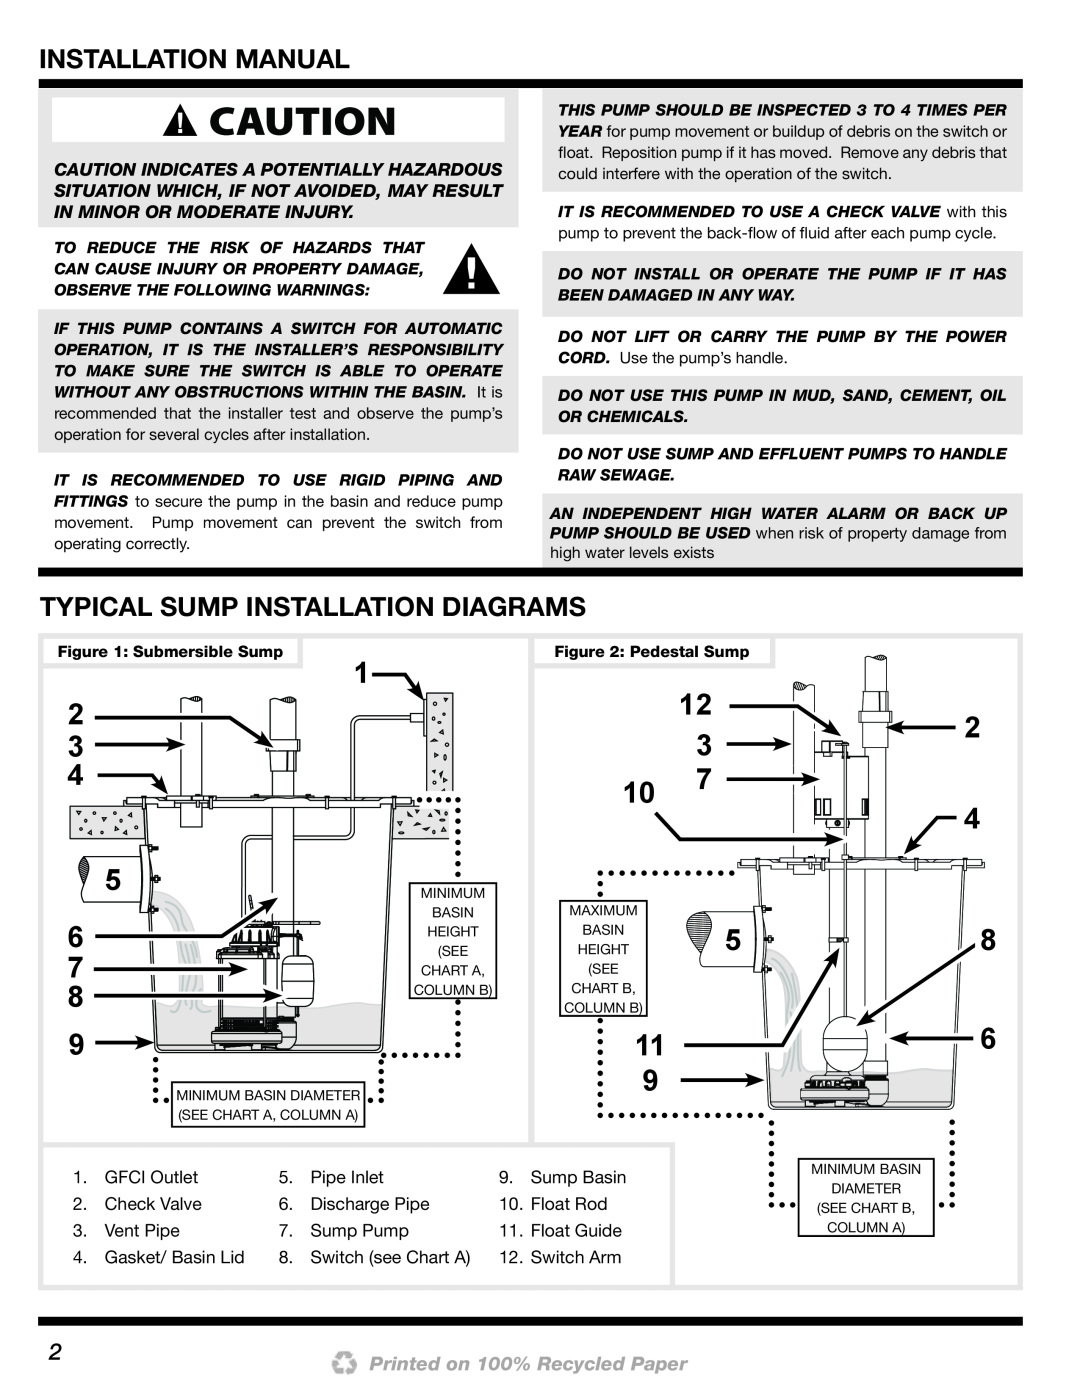 Wayne 200000-015 installation manual Installation Manual, Typical Sump Installation Diagrams, 2 4 8 6 